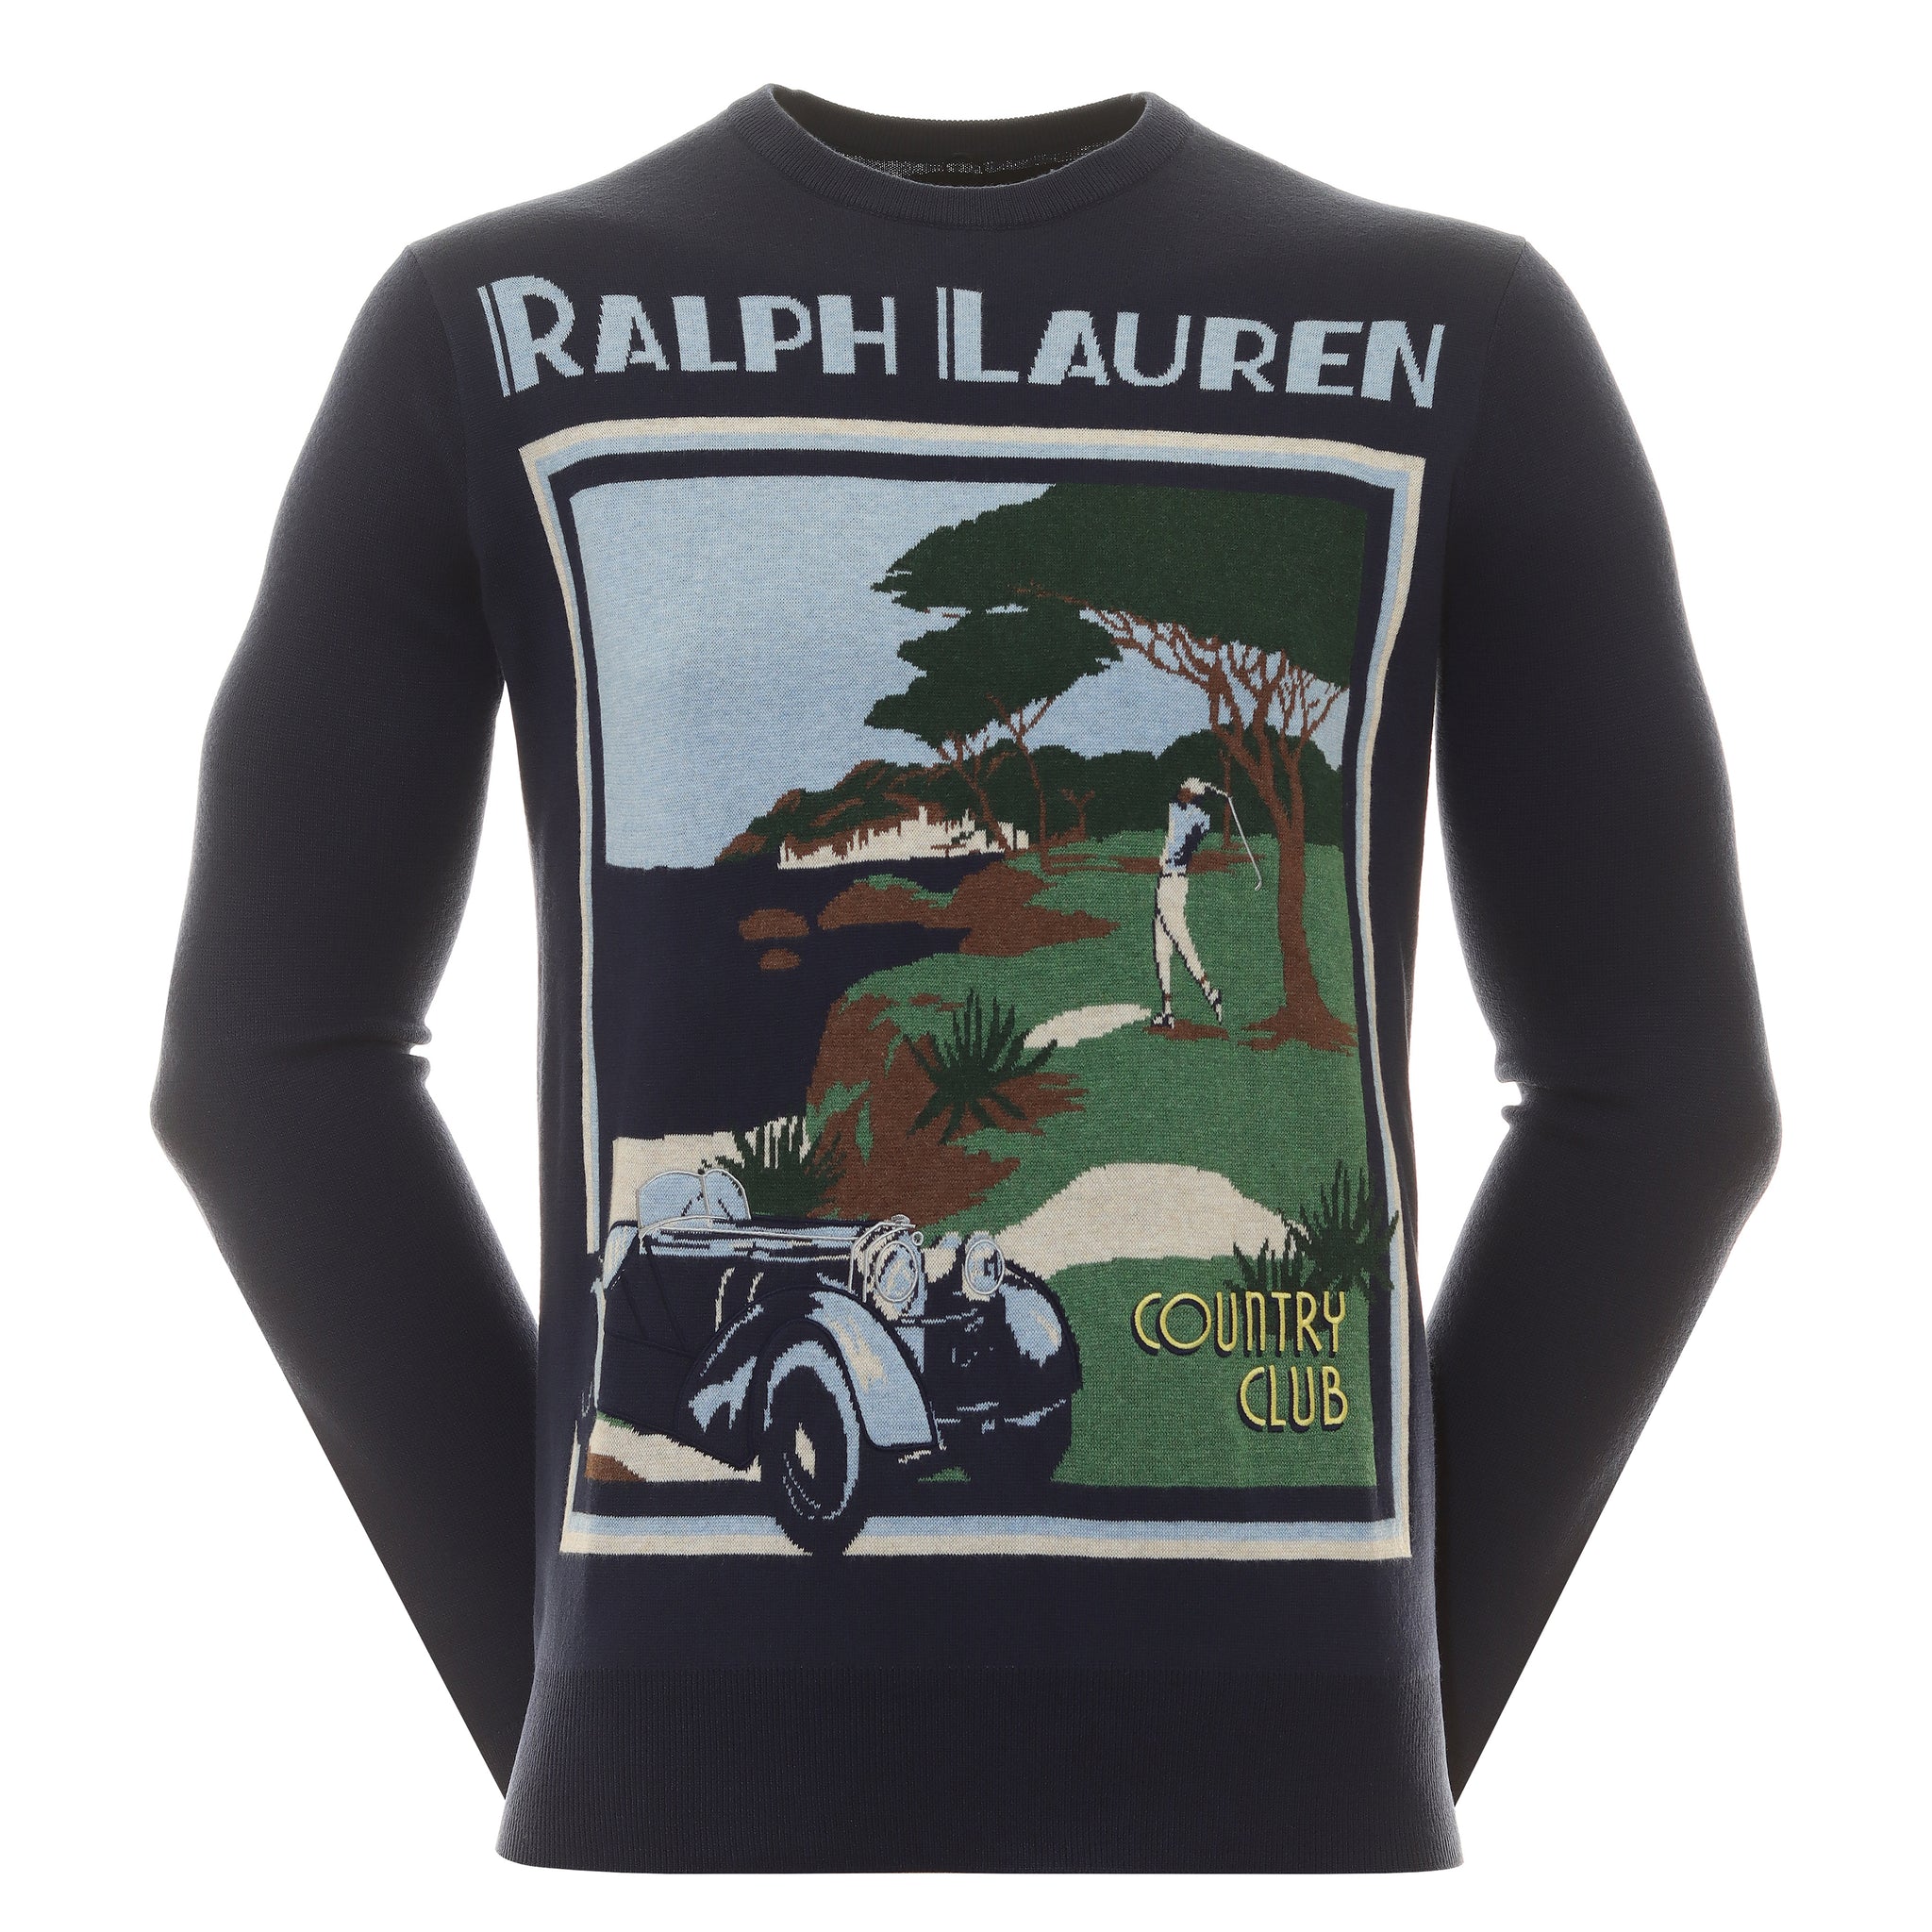 rlx-ralph-lauren-country-club-crew-sweater-785915869-refined-navy-001